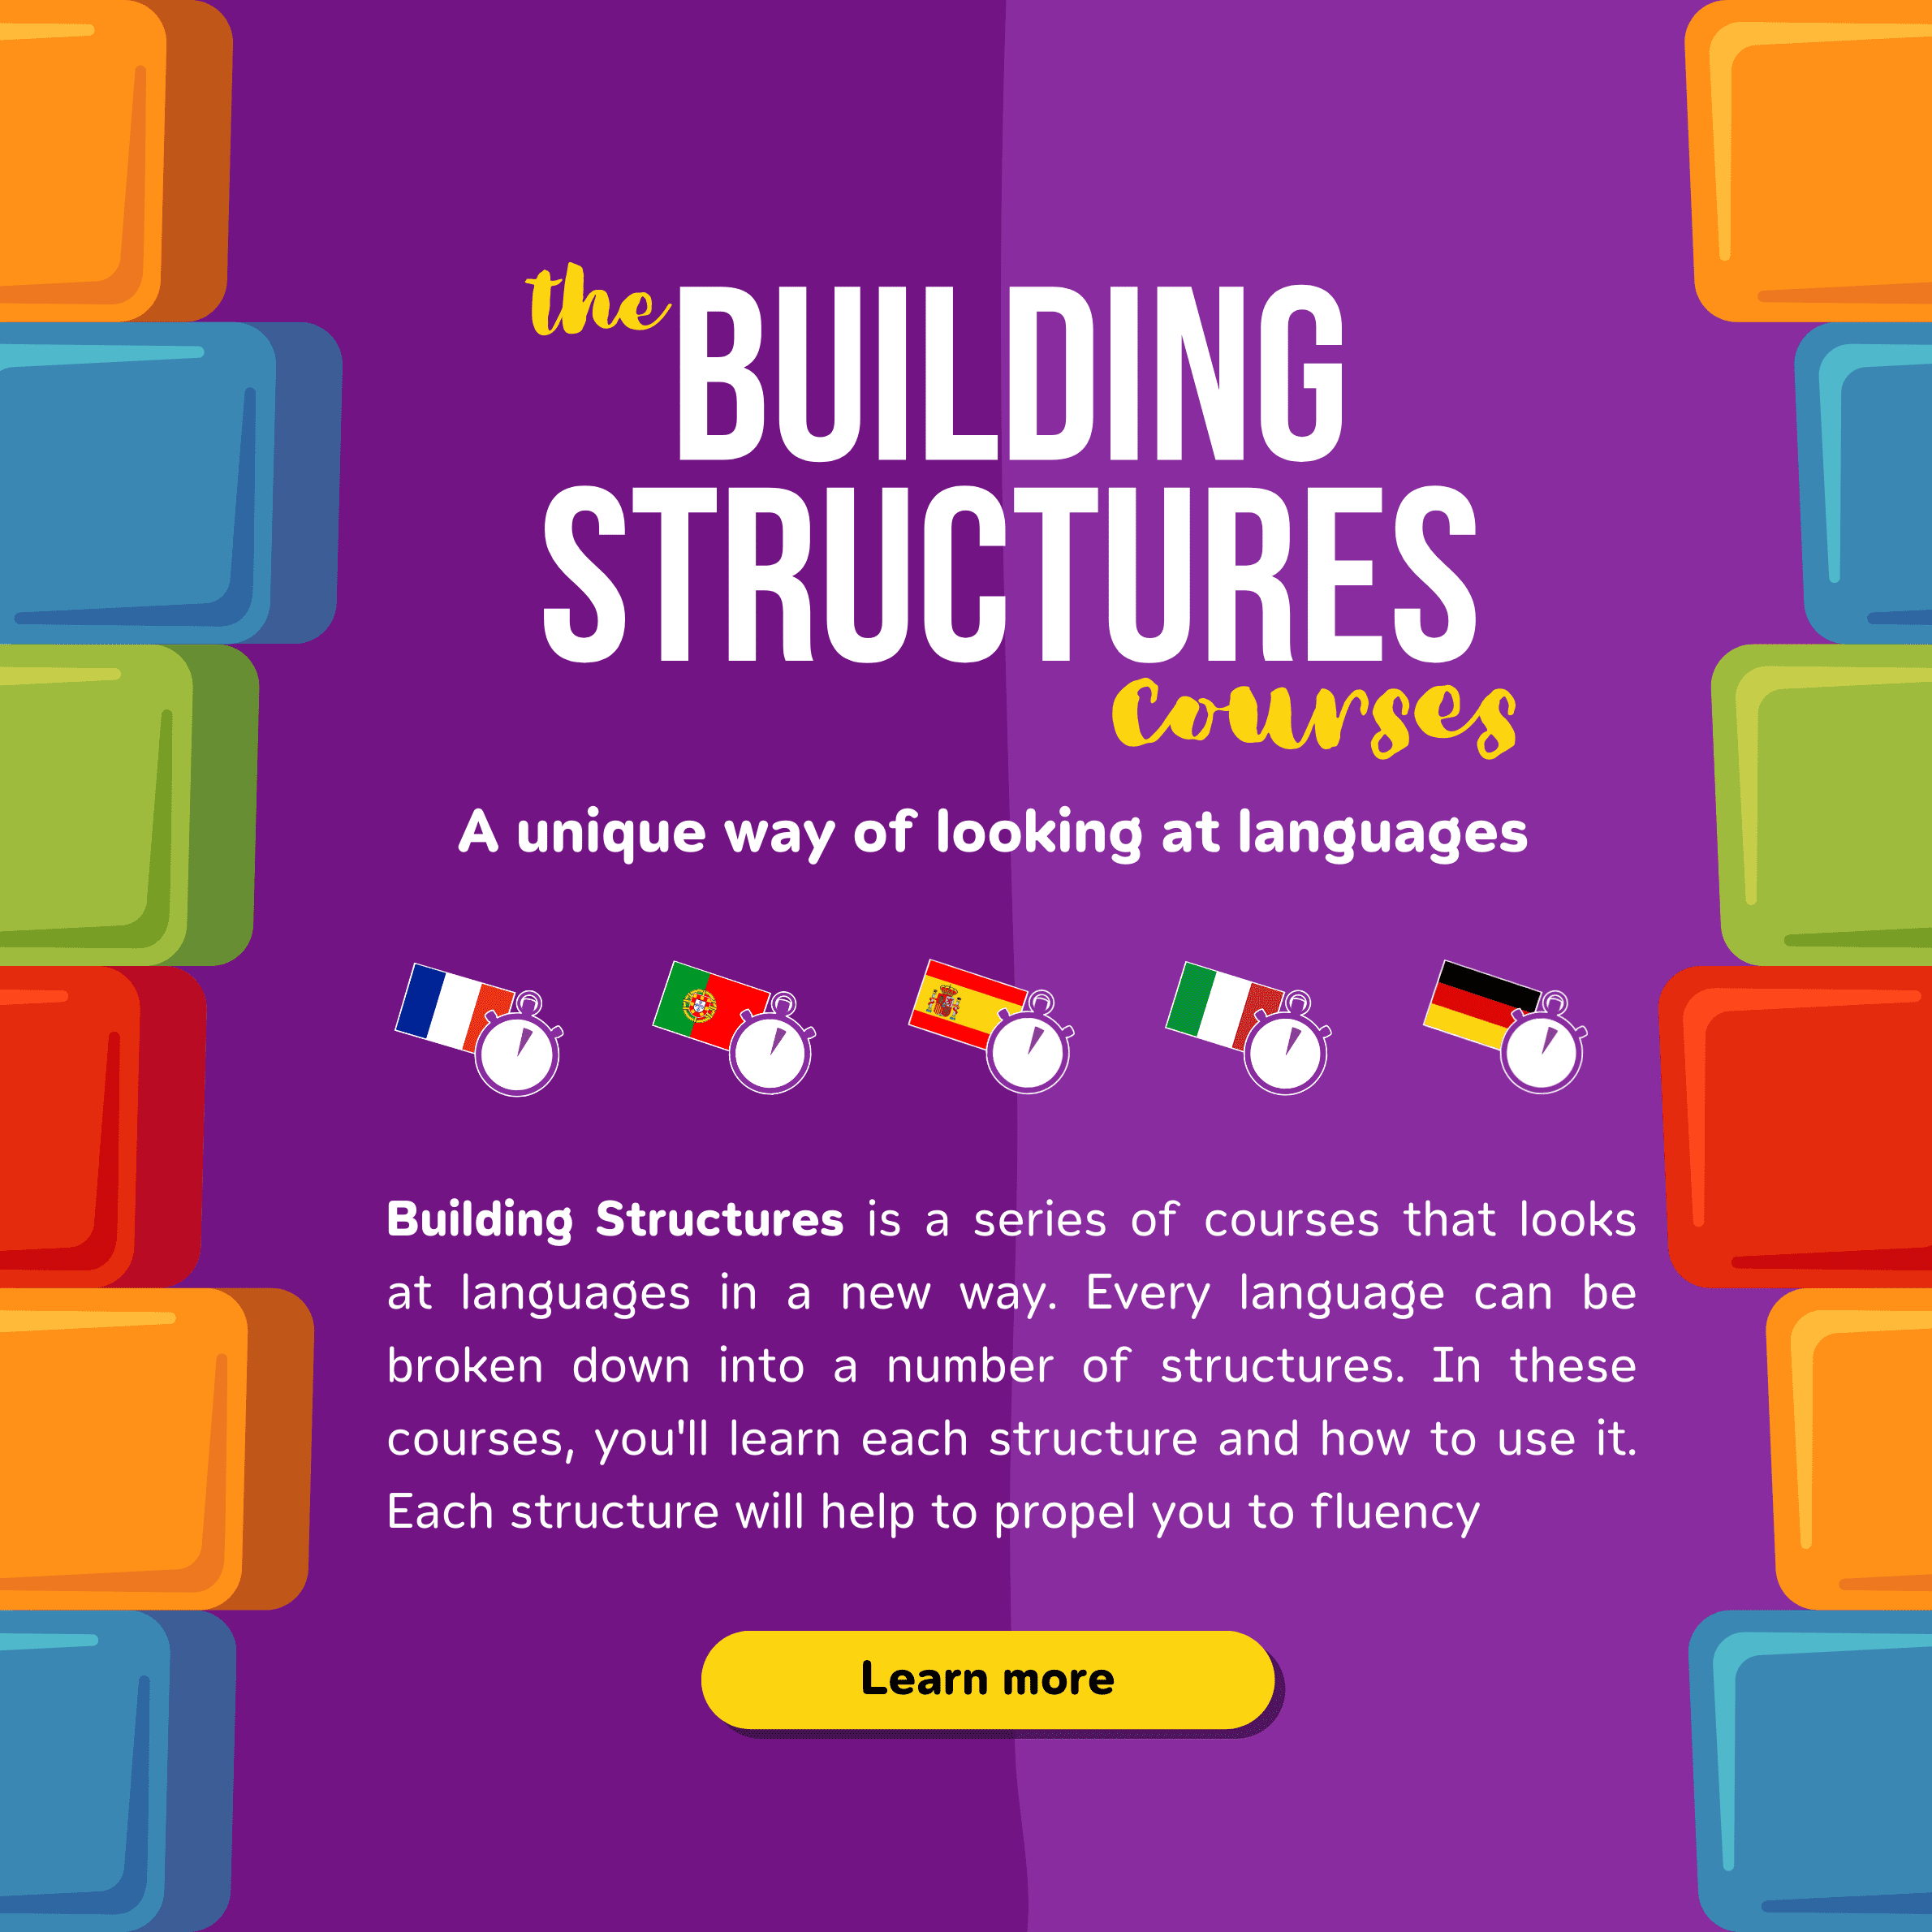 Building Structures courses